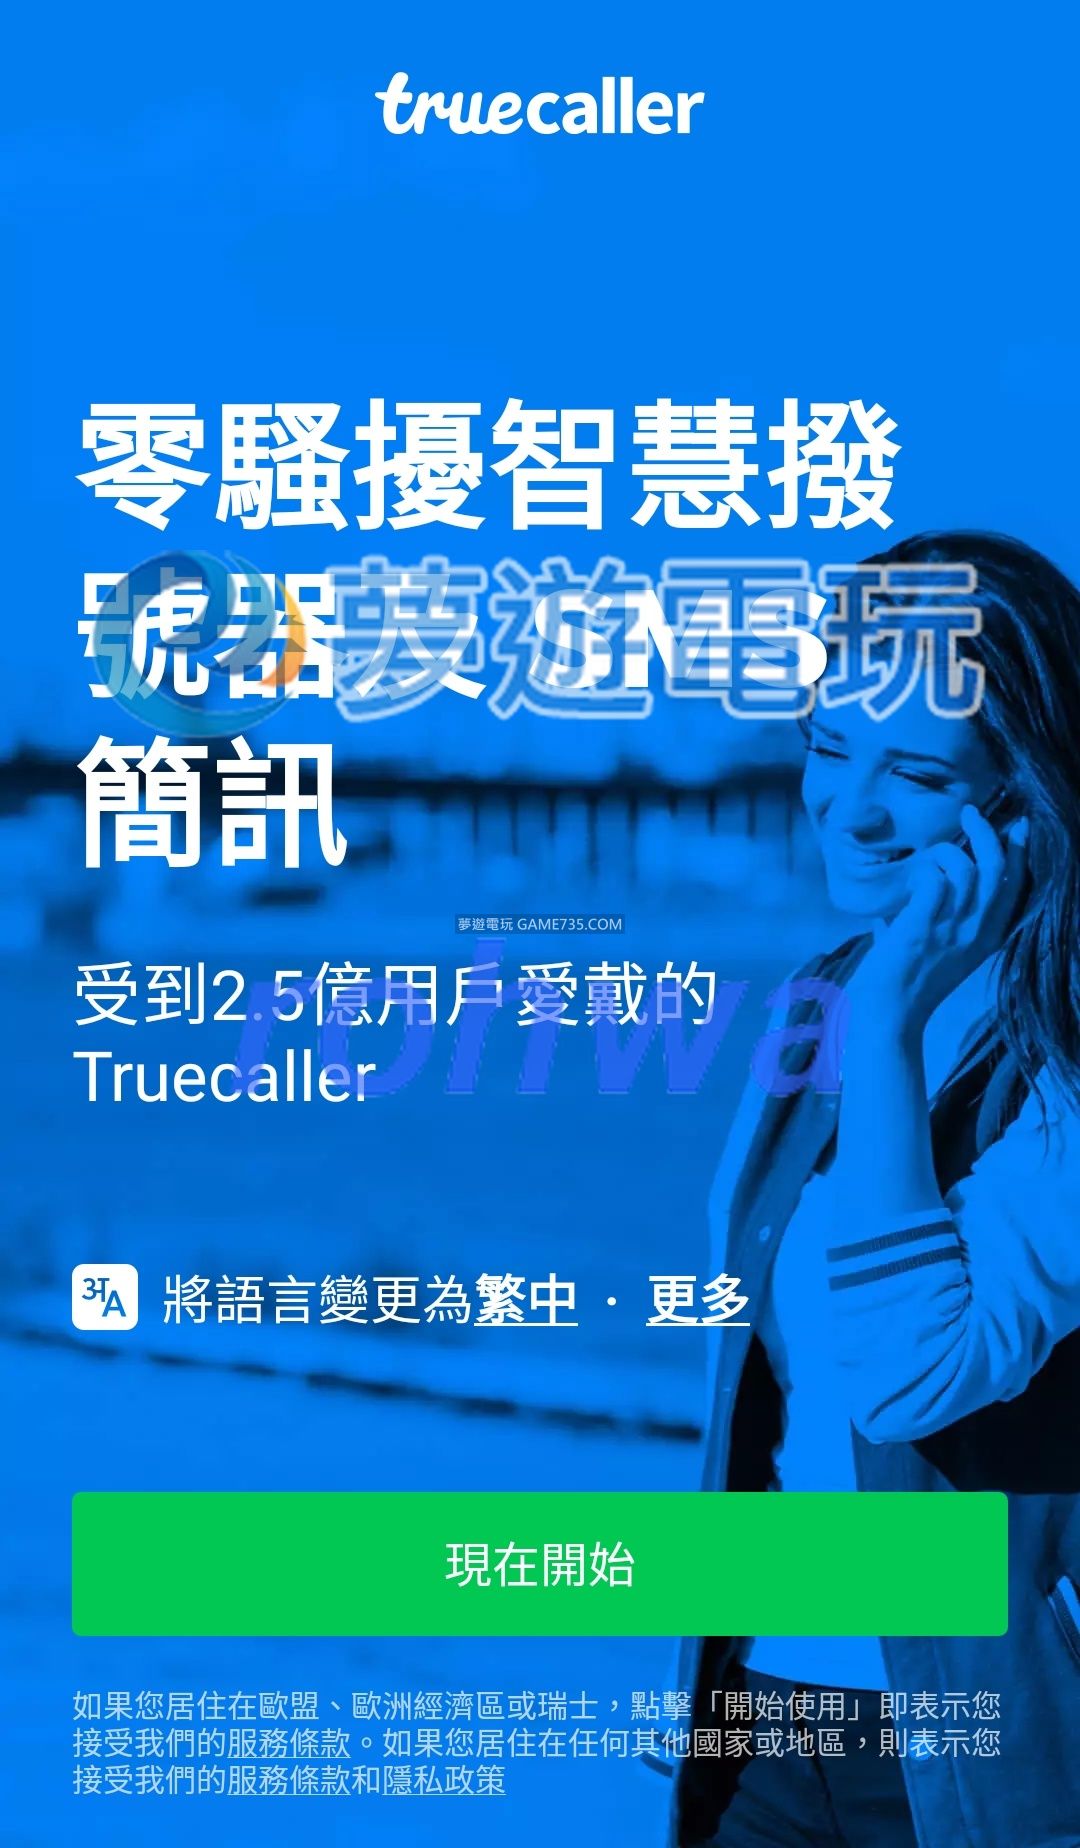 Truecaller__1_.jpg